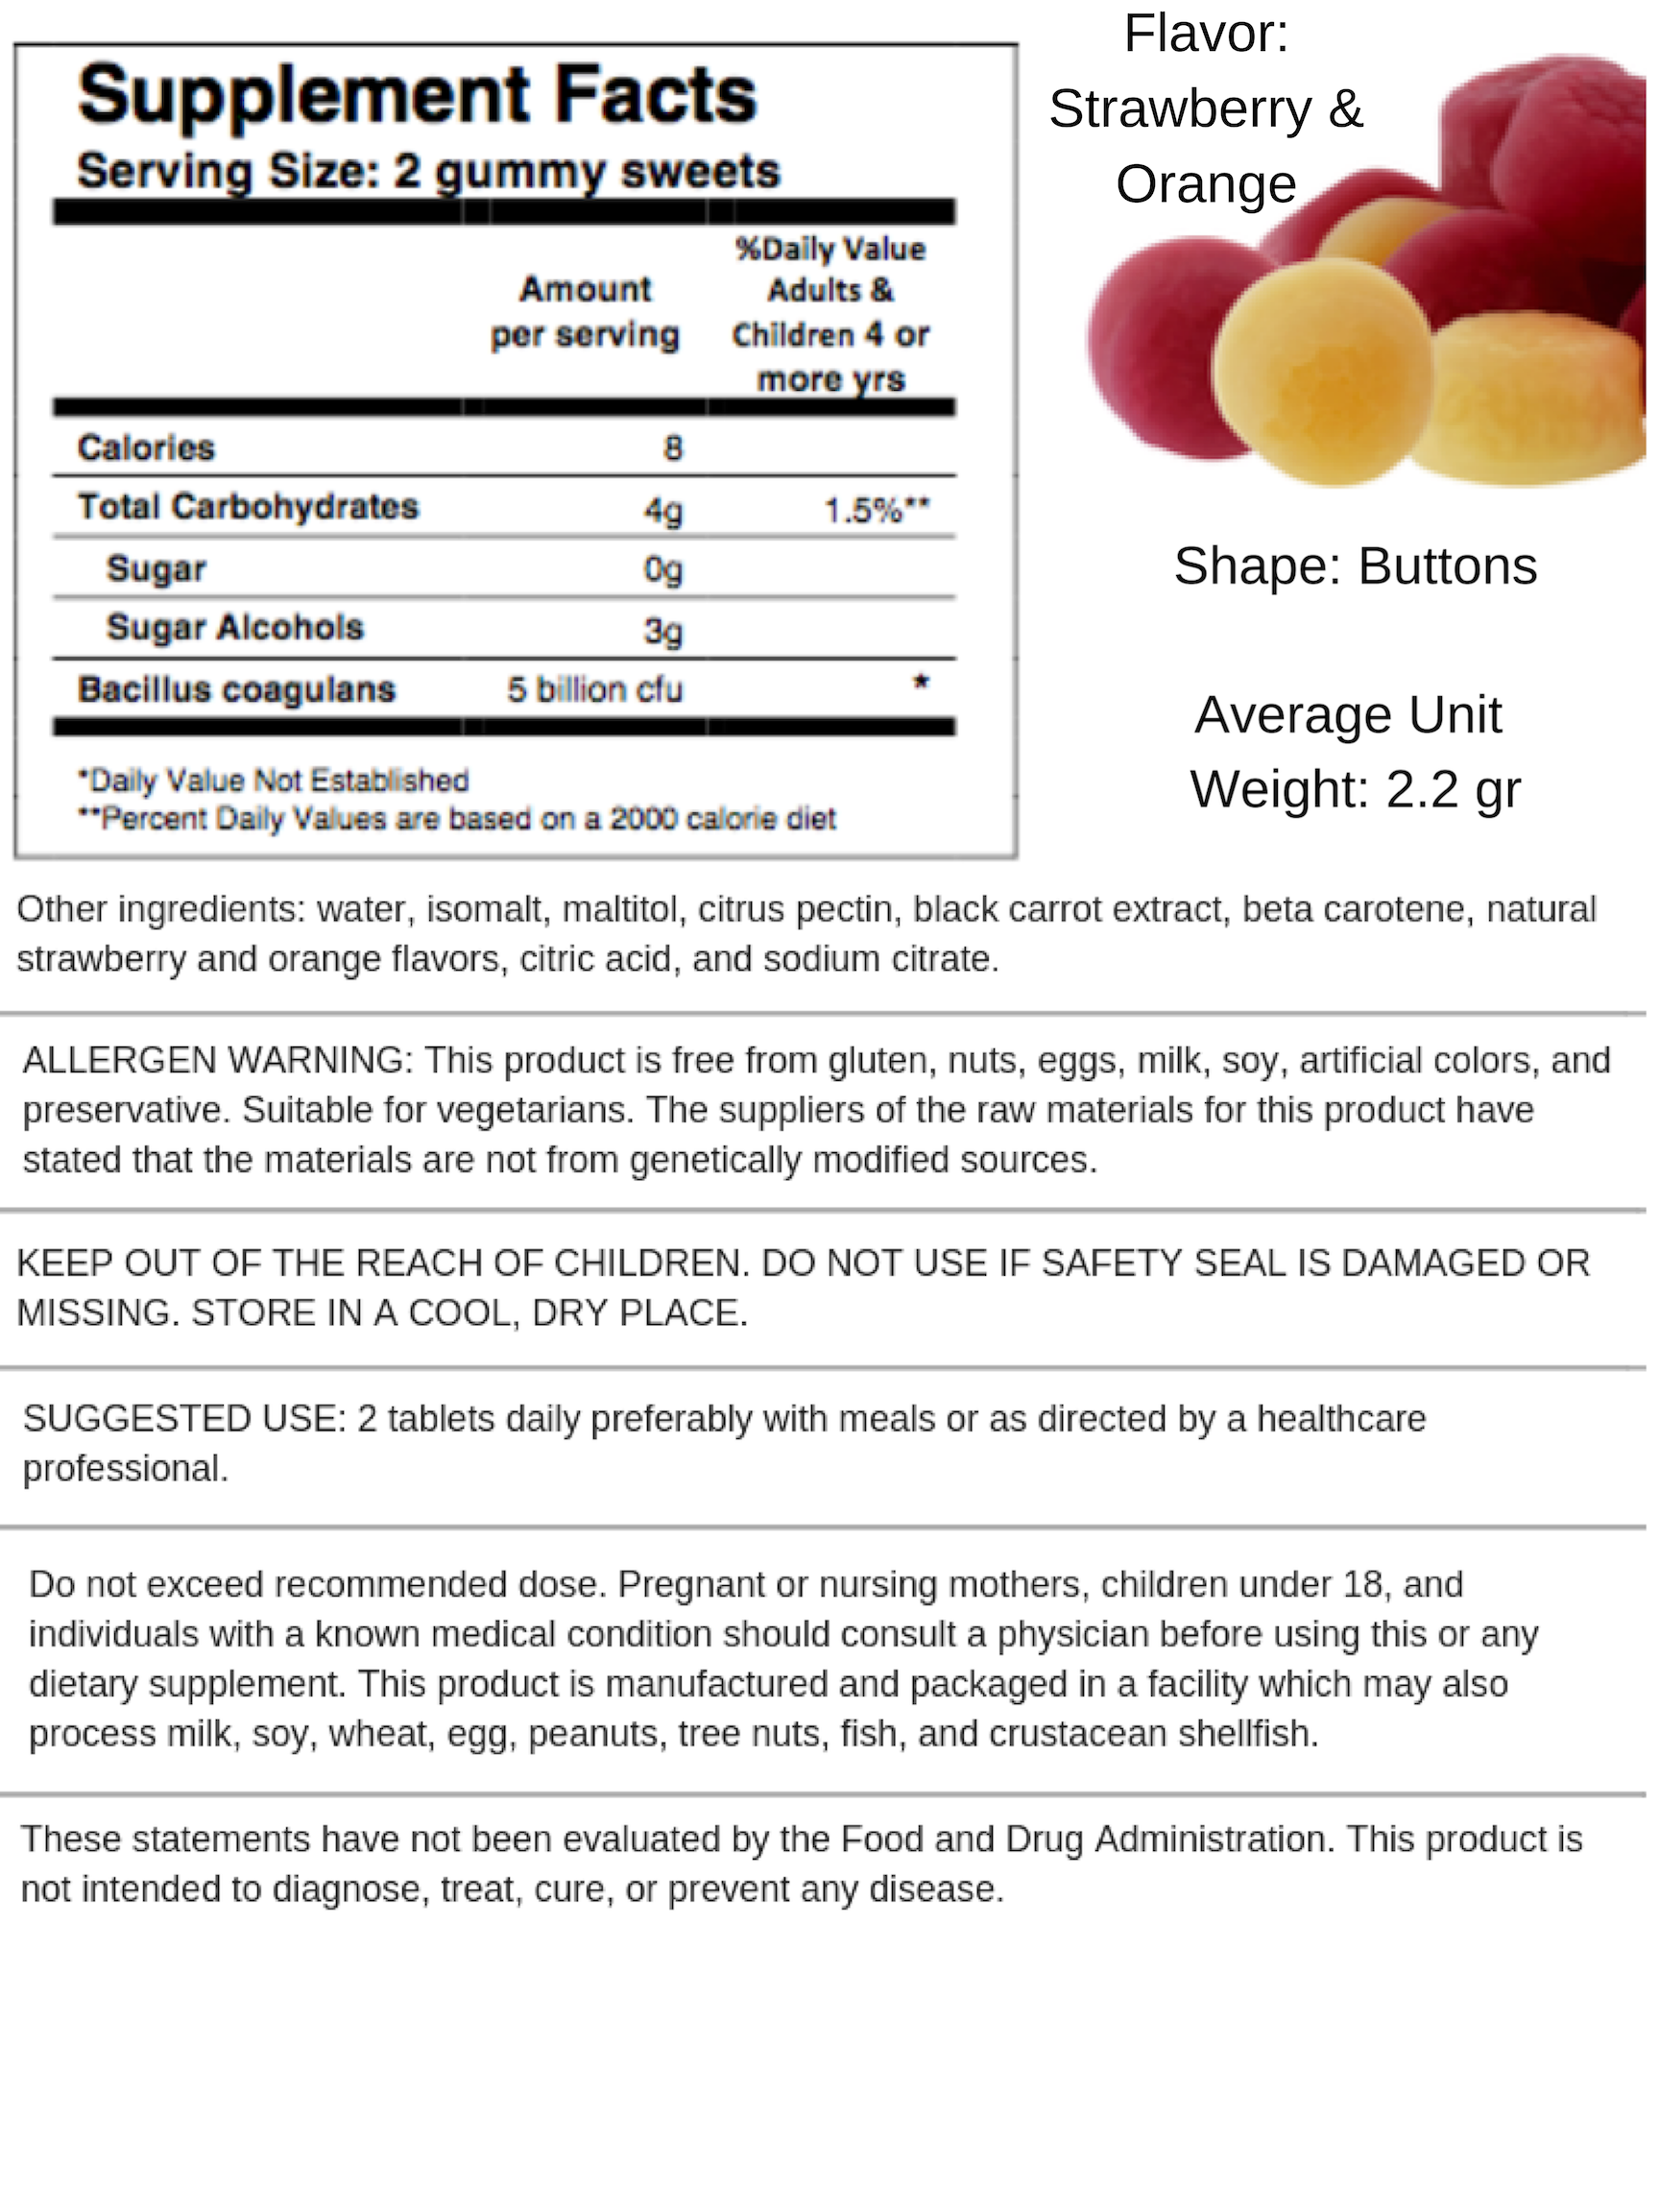 Sugar Free Probiotic - Strawberry Orange